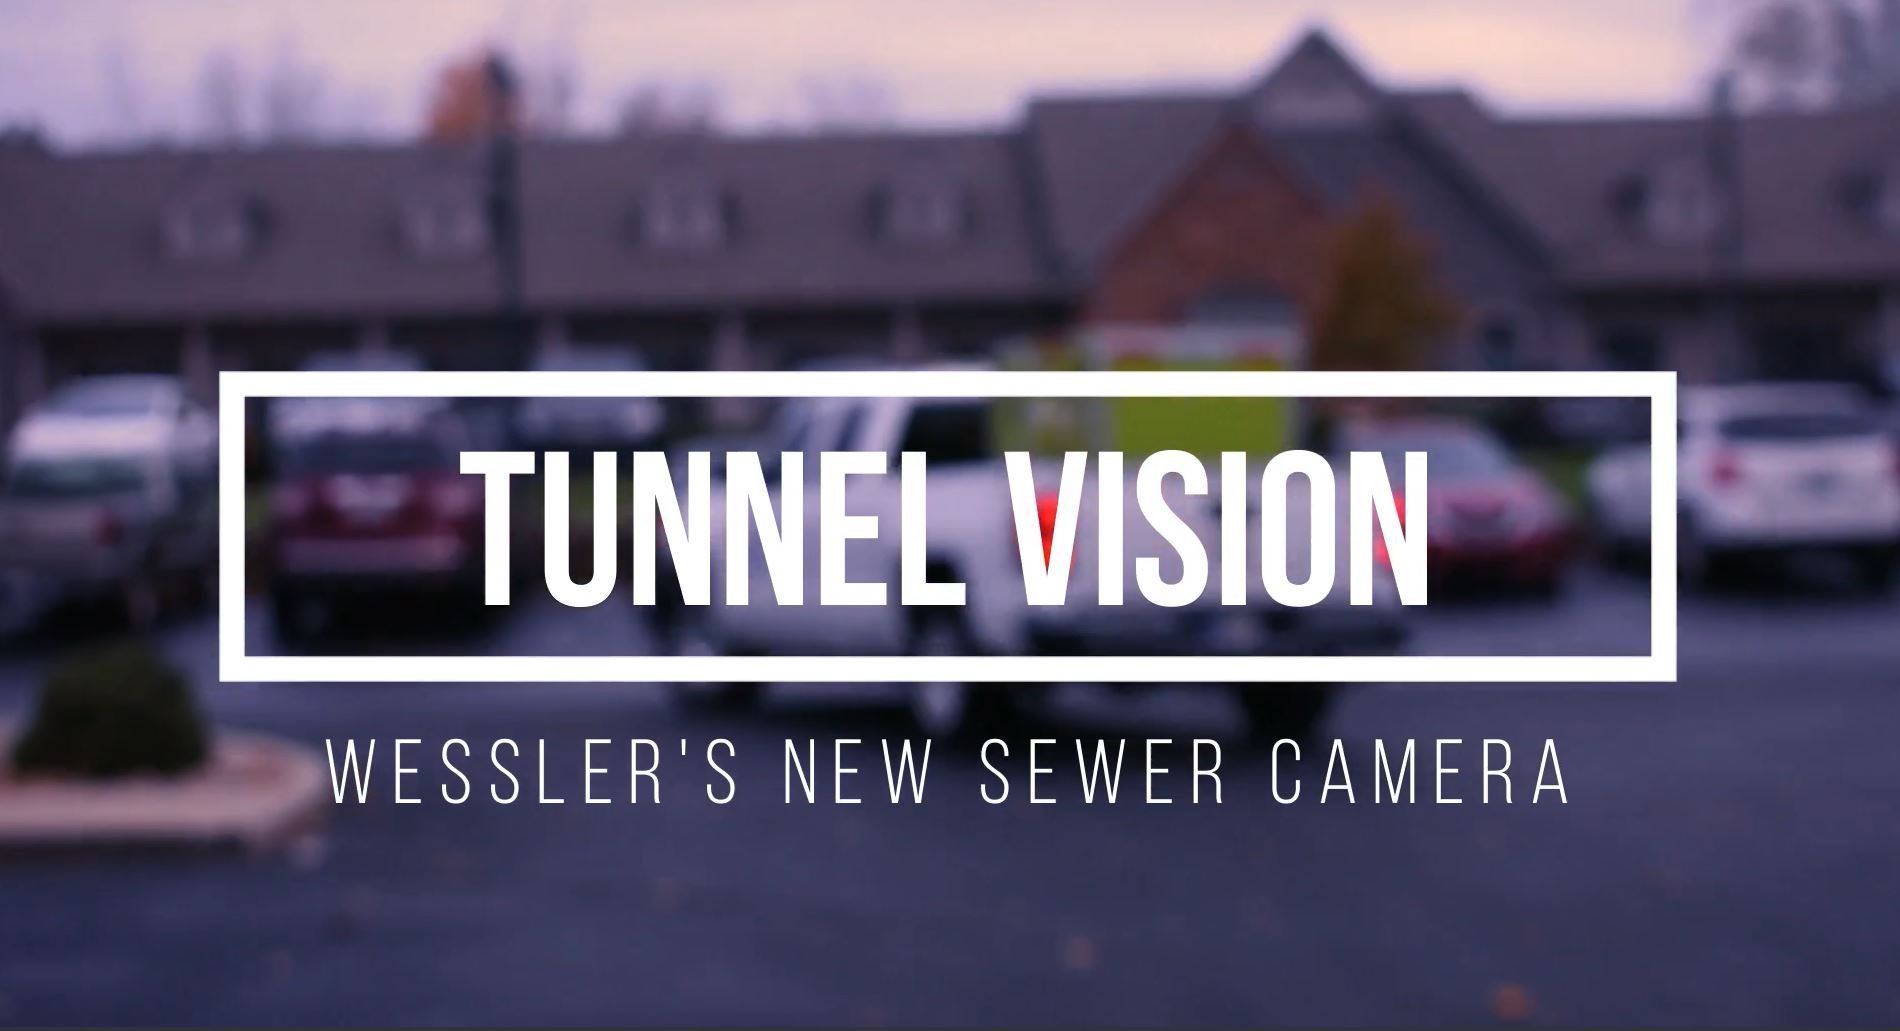 Tunnel Vision: Wessler's New Sewer Camera